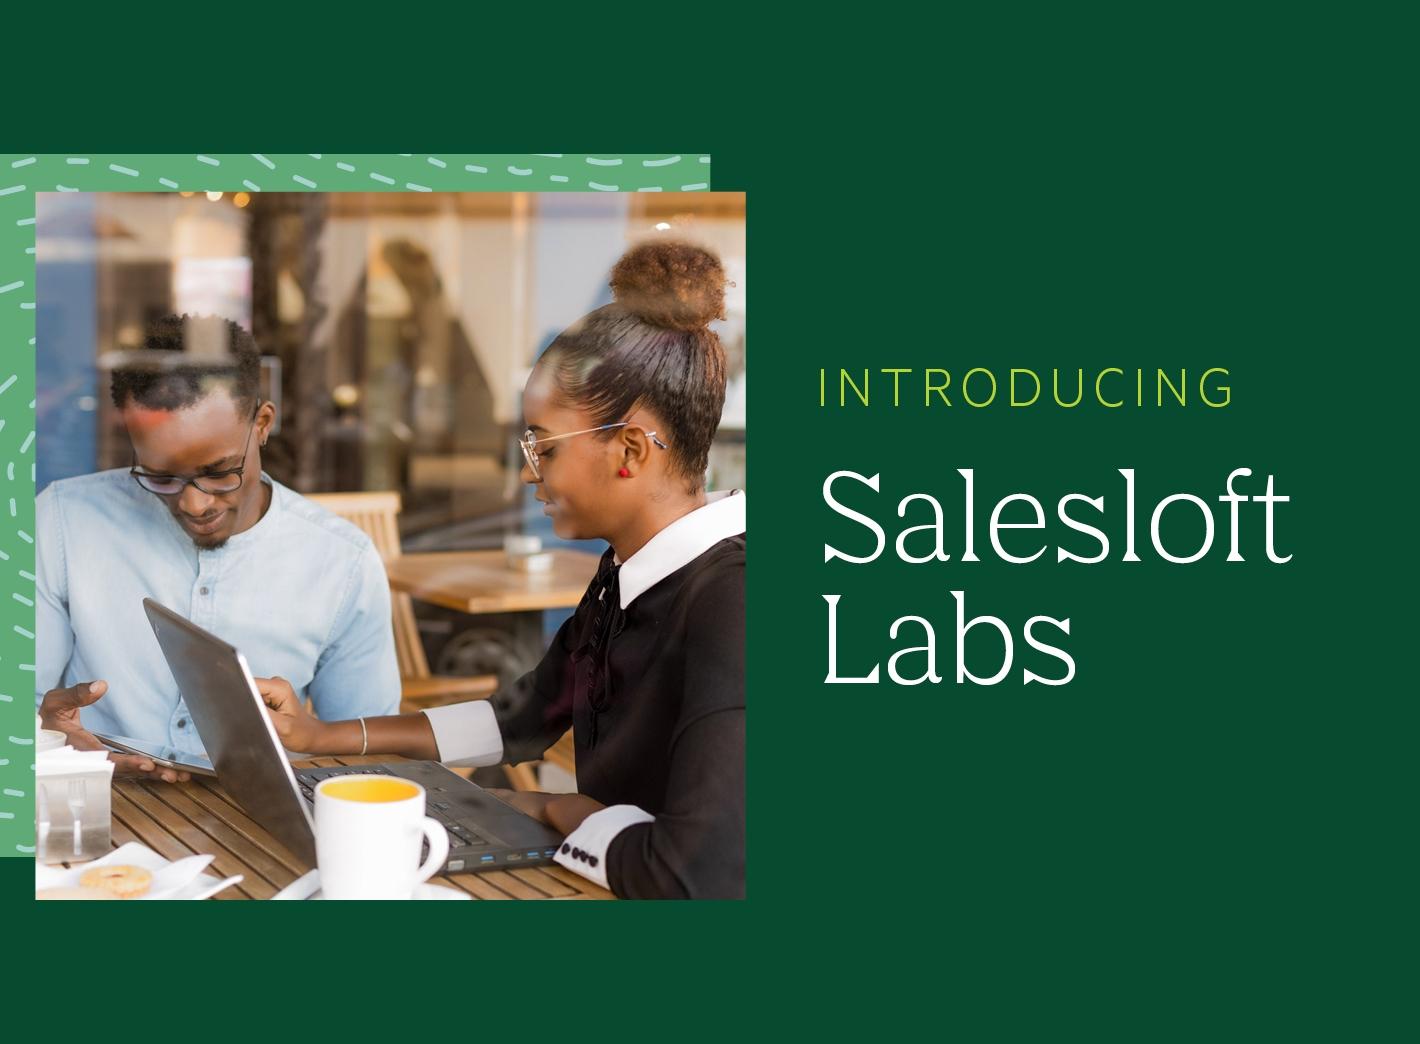 "Introducing Salesloft Labs"